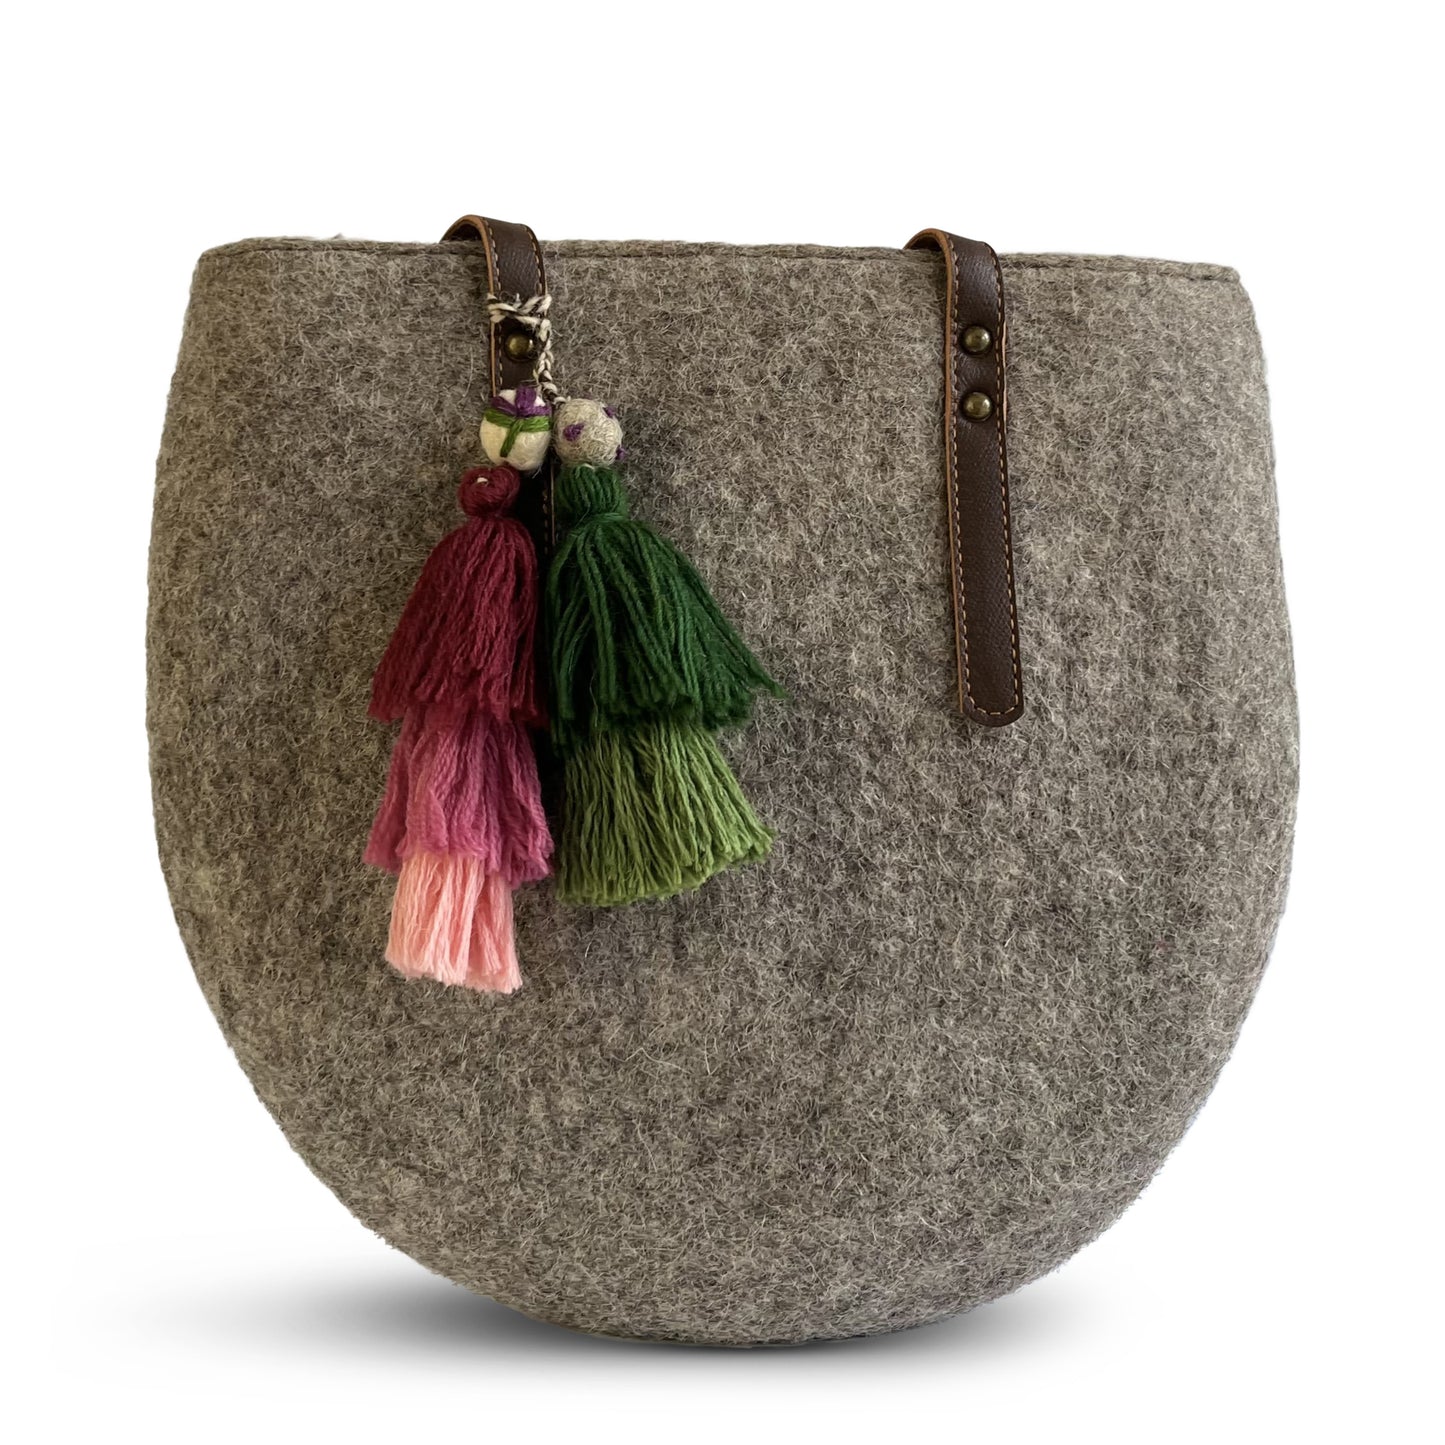 Delbar Handmade Felt Tote Bag